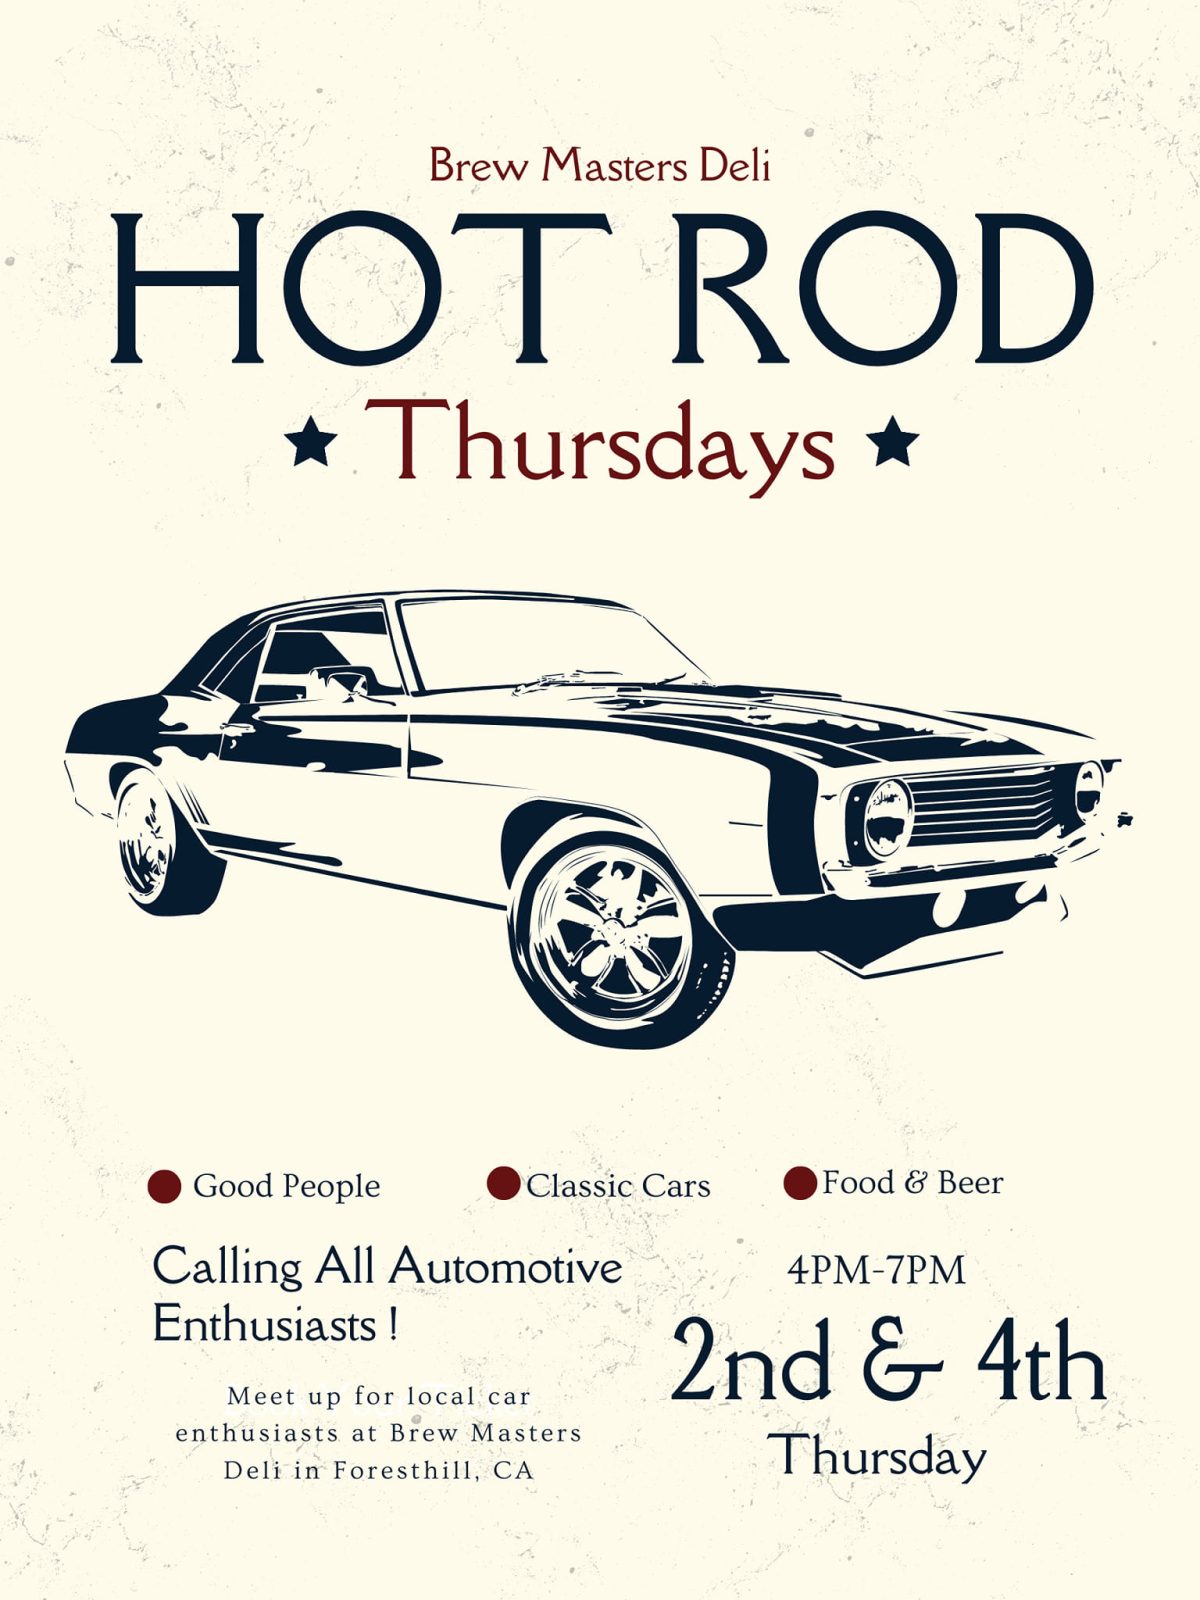 Hot Rod Thursday